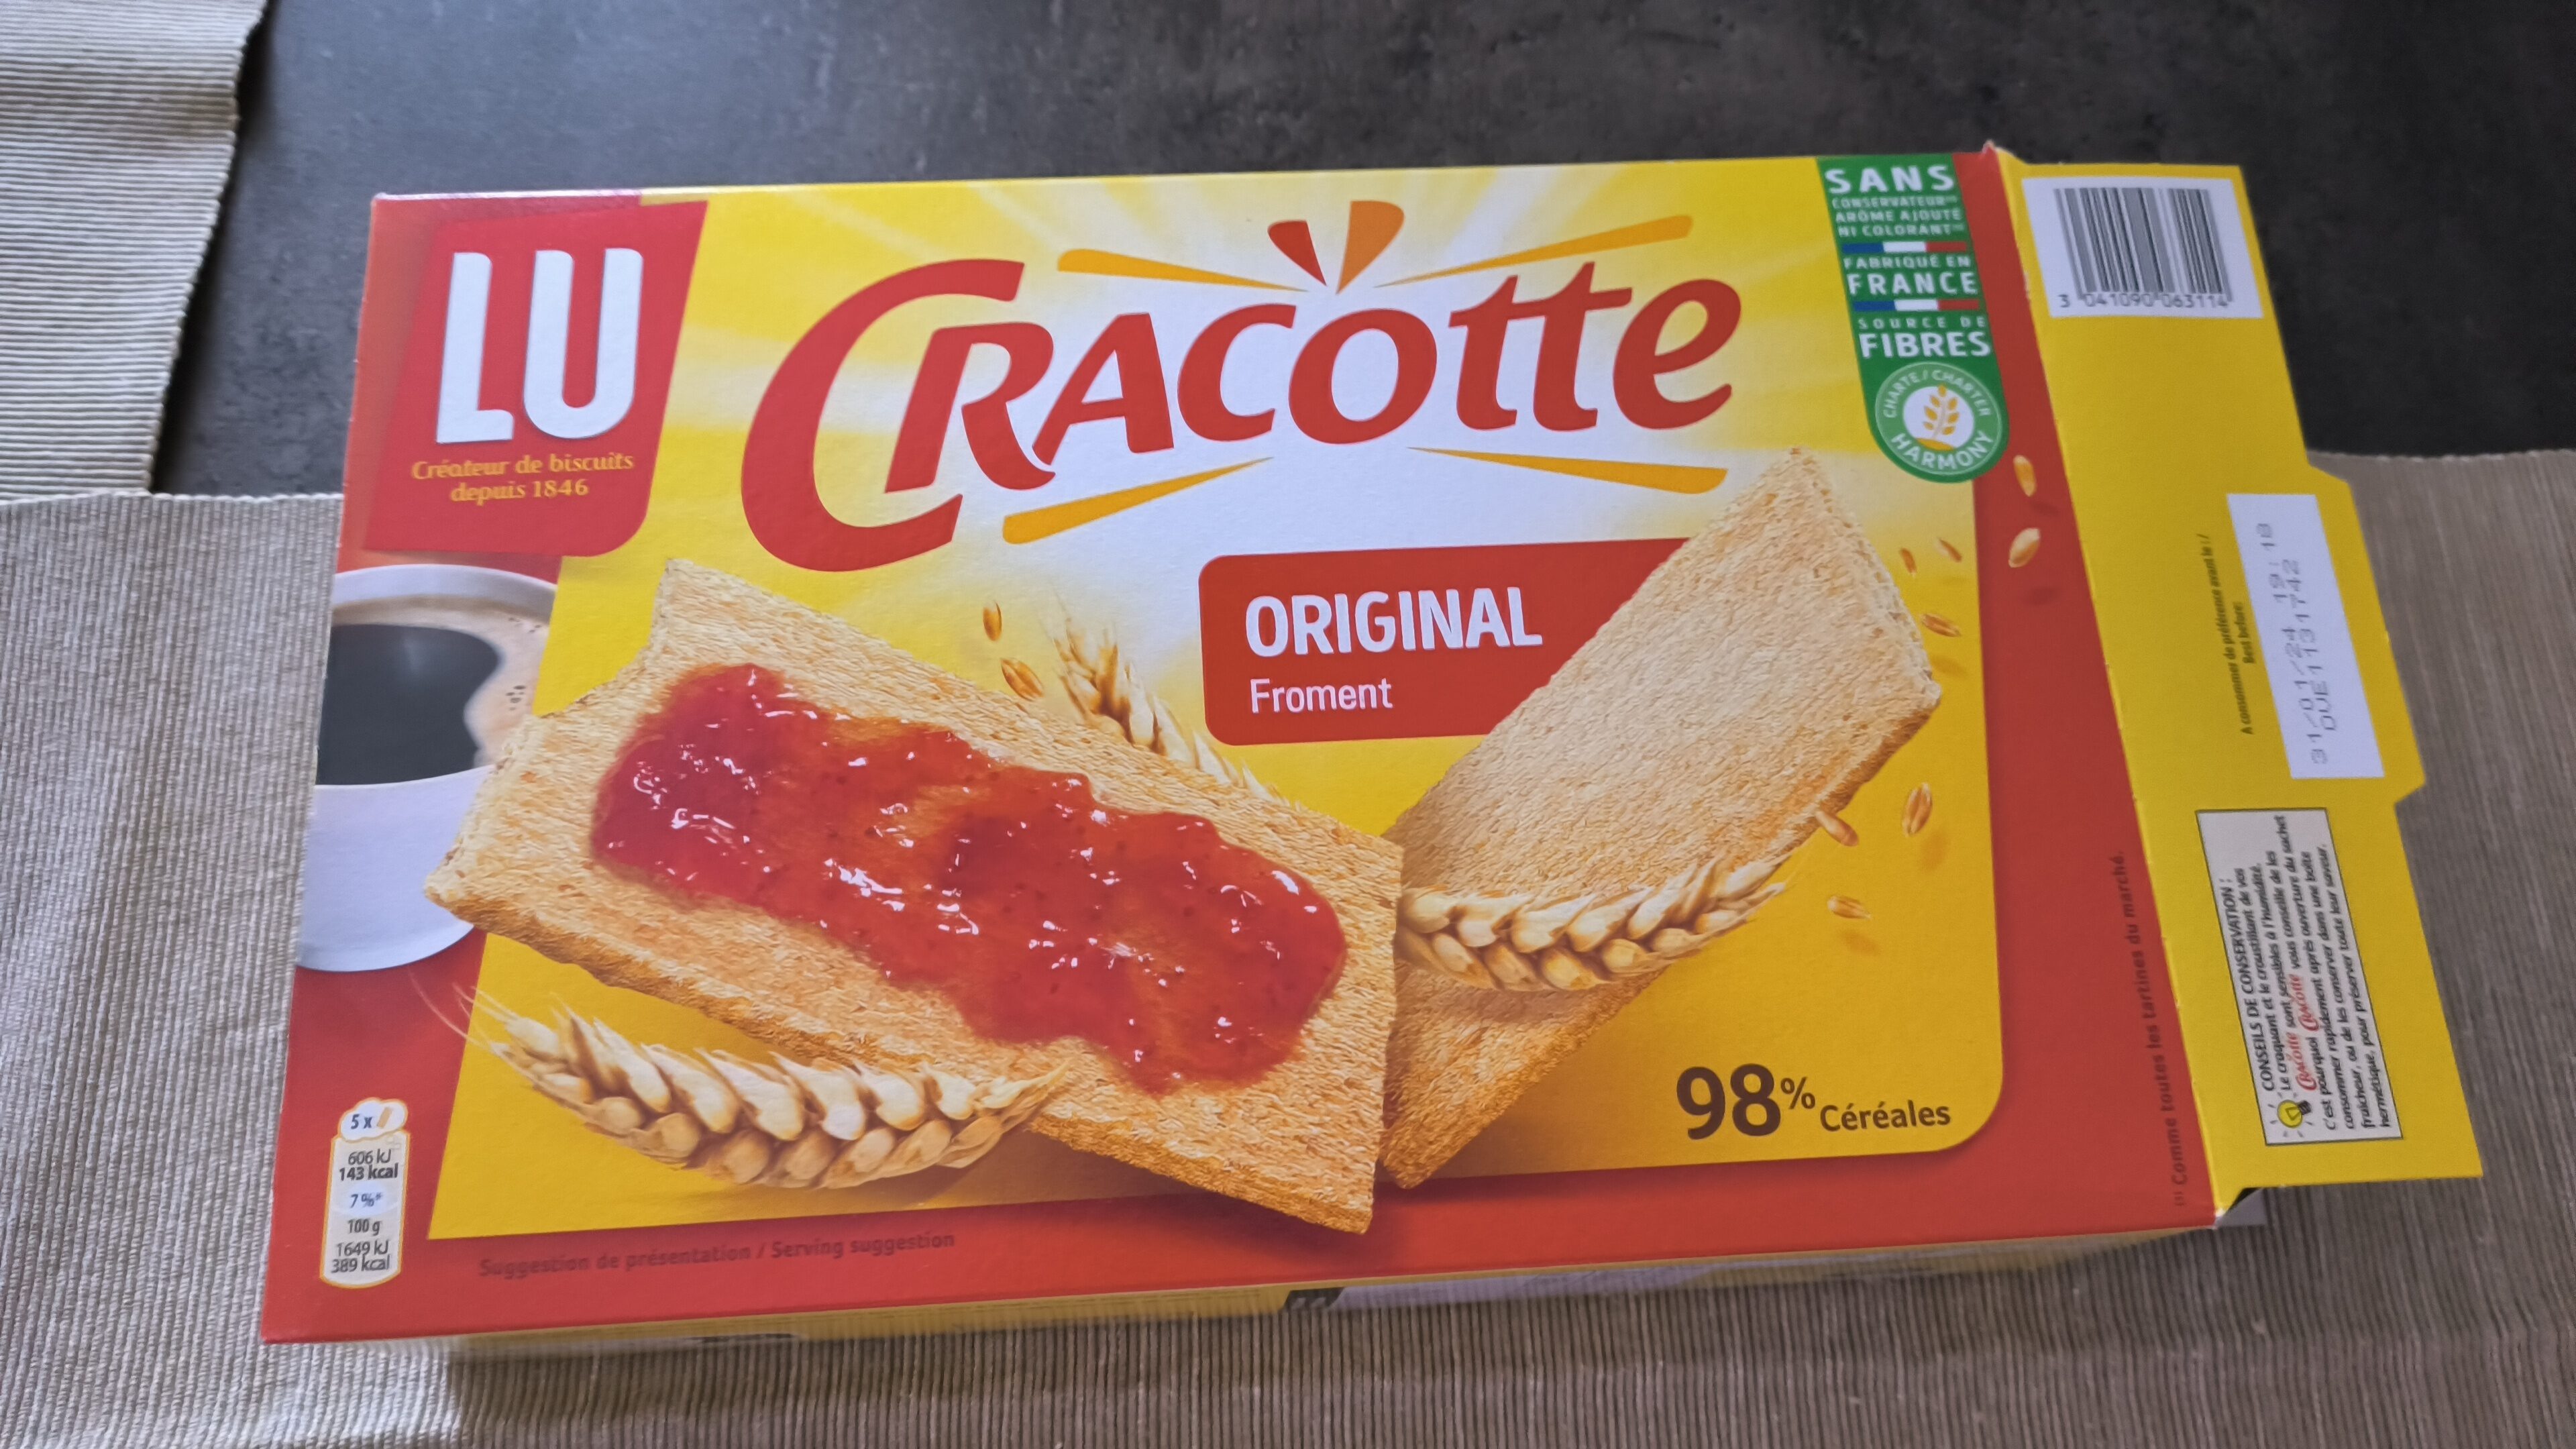 Lu - Cracotte Original Wheat Slices, 250g (8.8oz) - Produkt - en